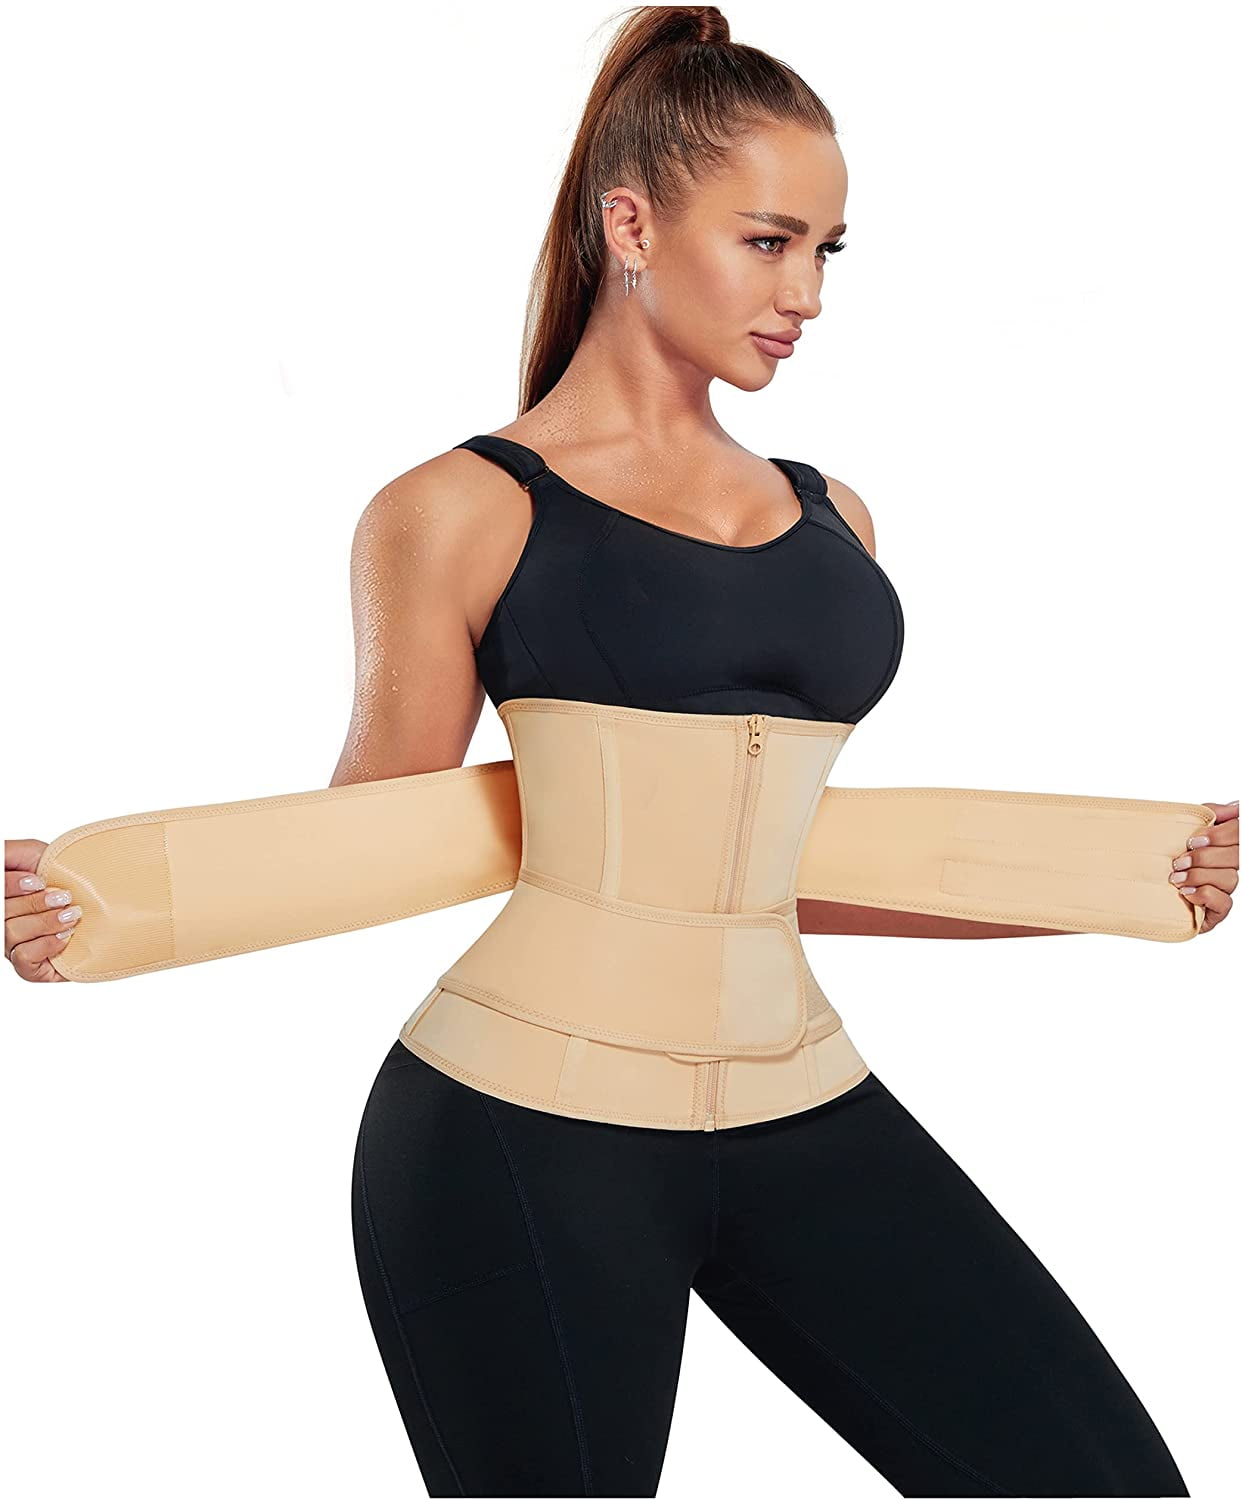 Gotoly Women Waist Trainer Corset Cincher Belt Tummy Control Postpartum  Body Shaper Sport Workout Girdle Slim Belly Band(Black Medium) 